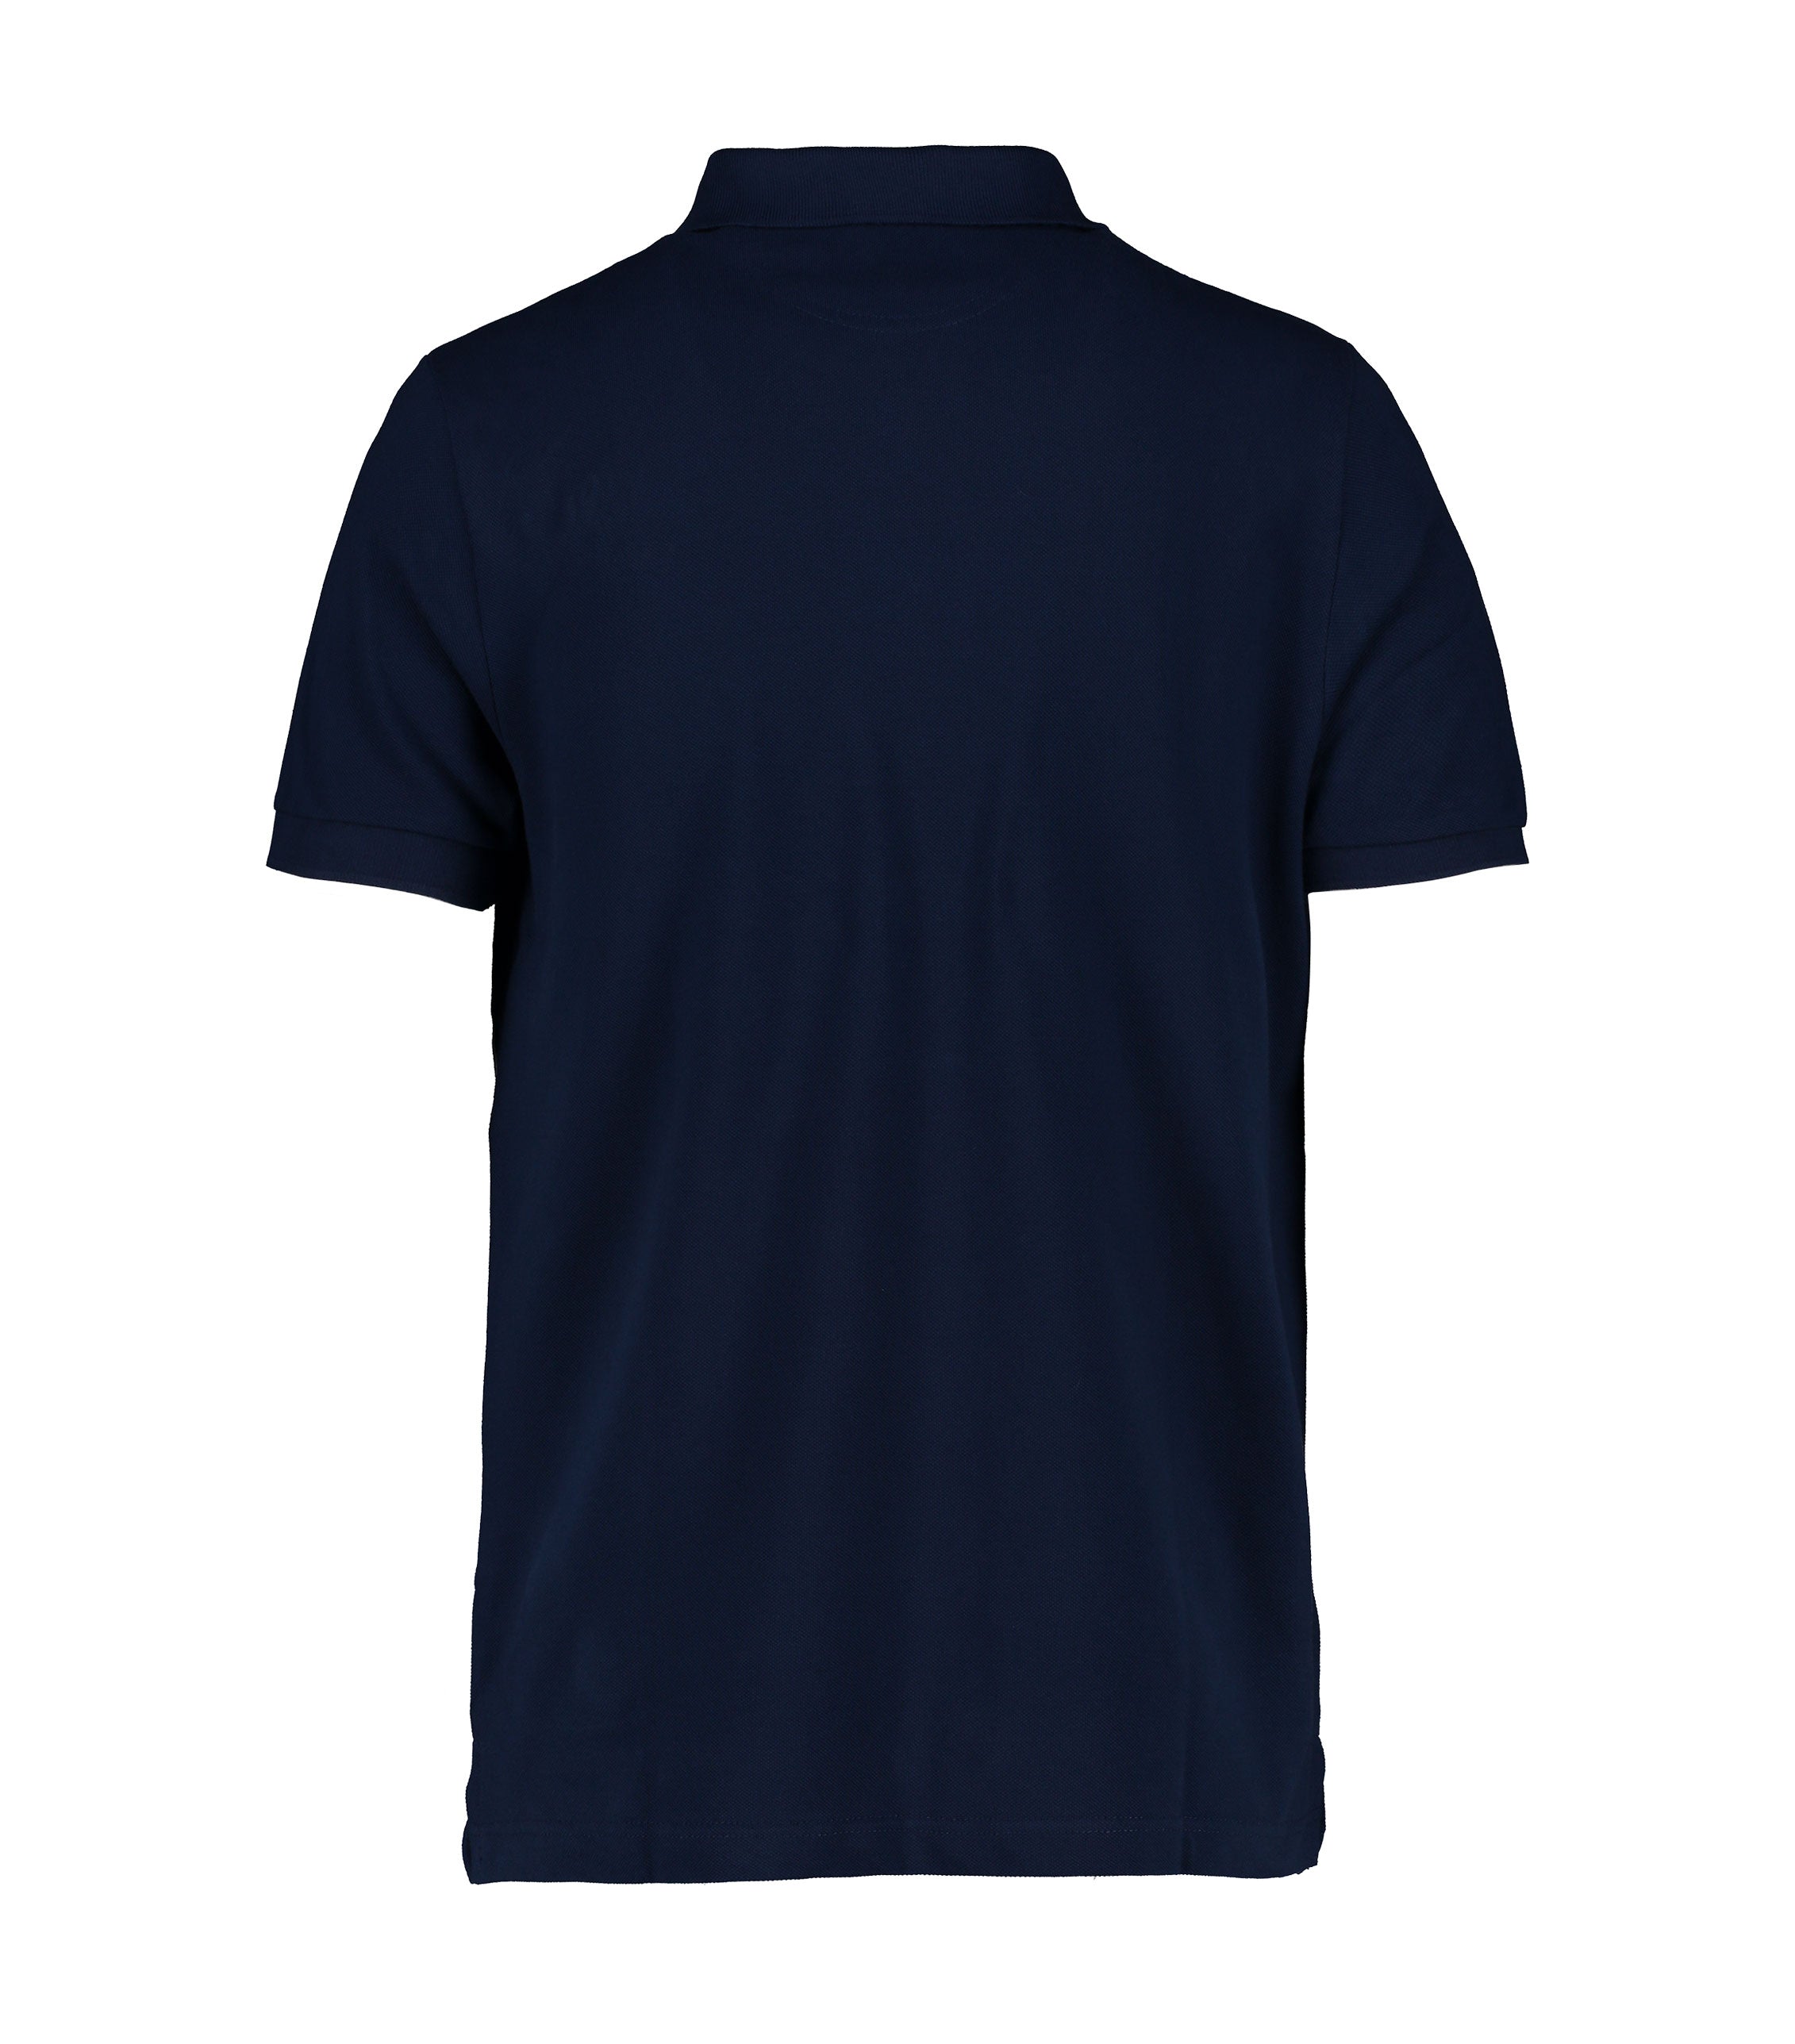 Pernfors Navy Polo Shirt